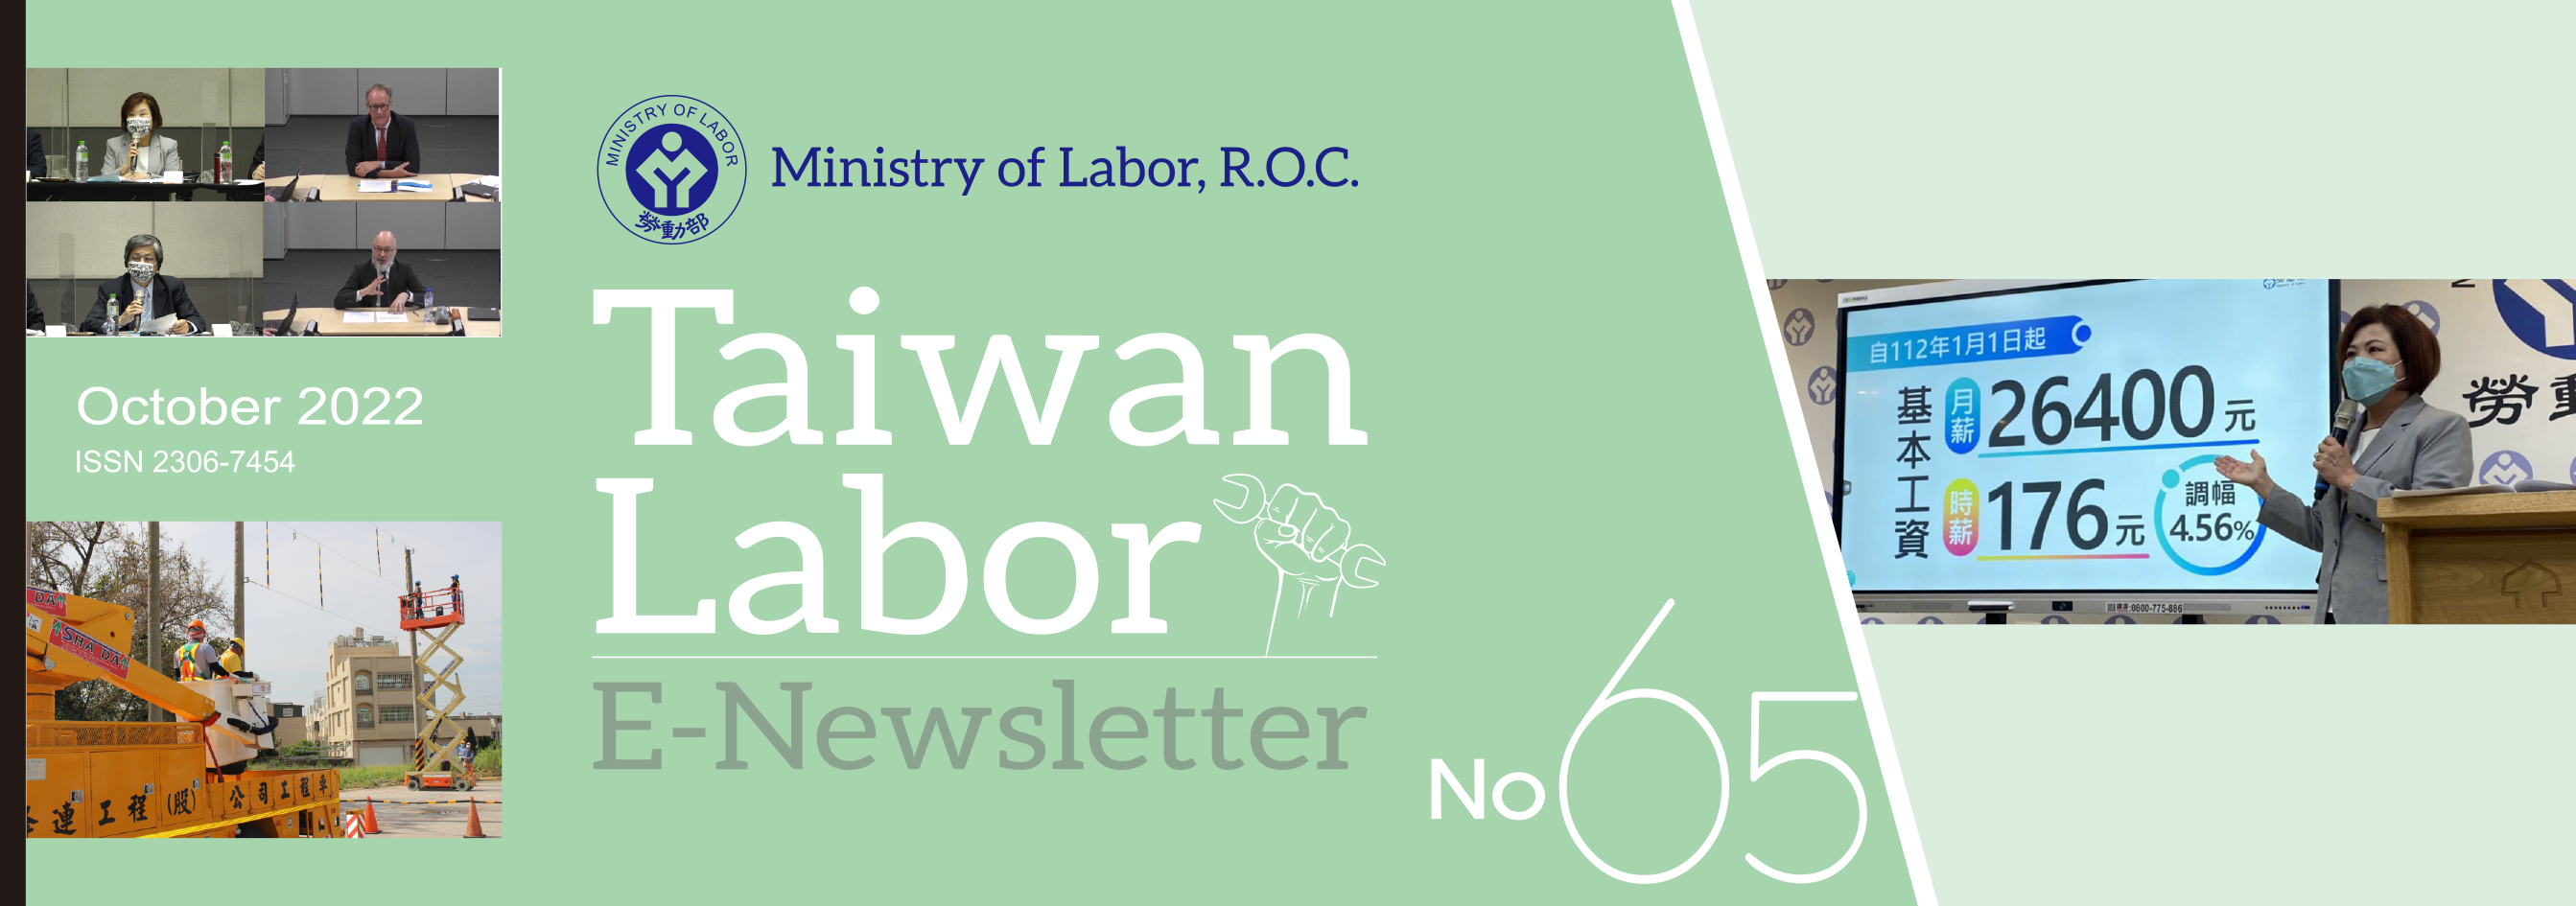 Taiwan Labor E-Newsletter No.65 Banner